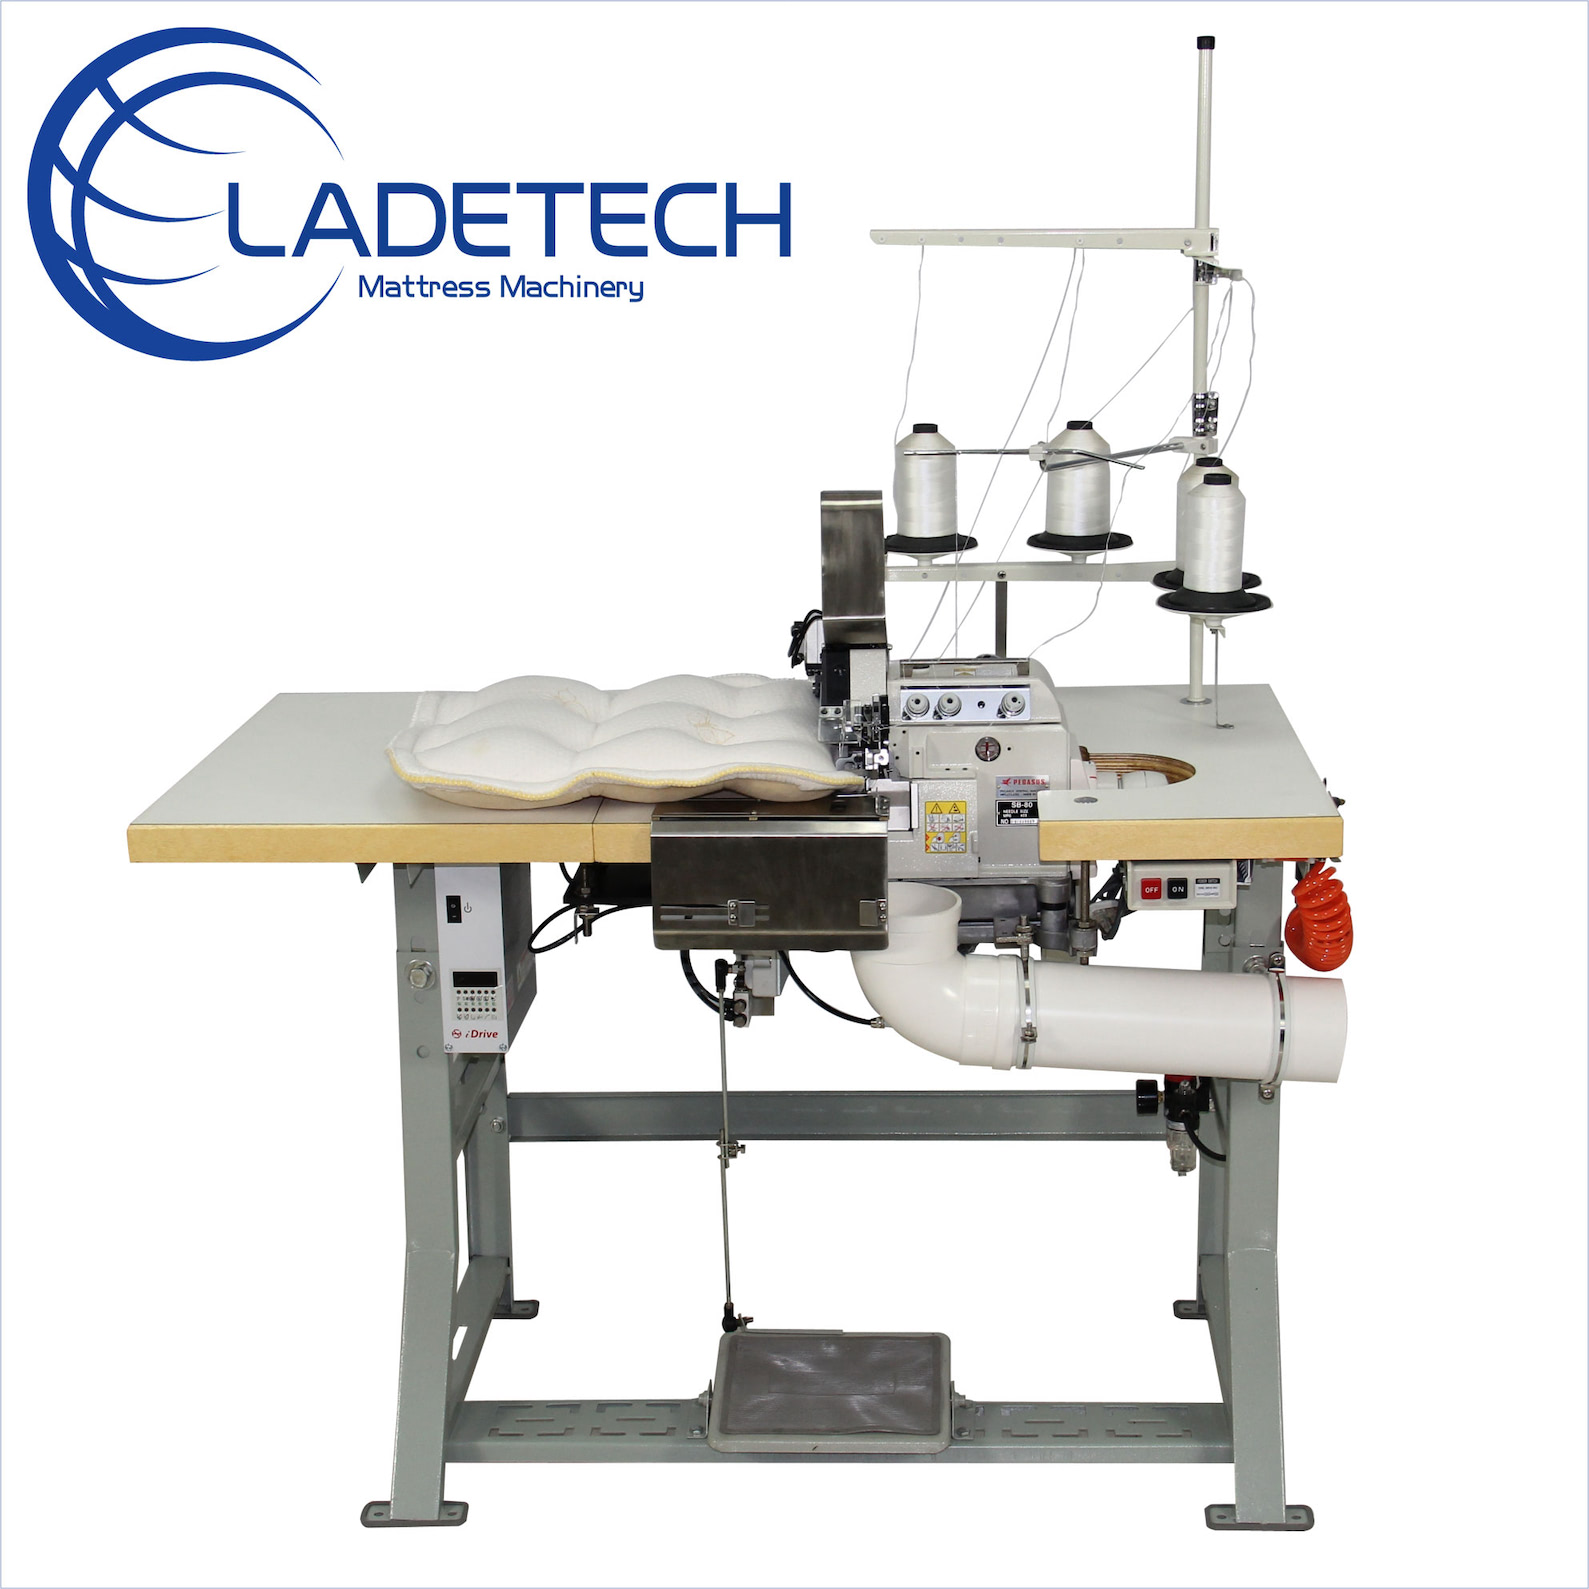 LDT-FG08 Heavy Duty Mattress Flanging Machine - Ladetech Mattress Machine